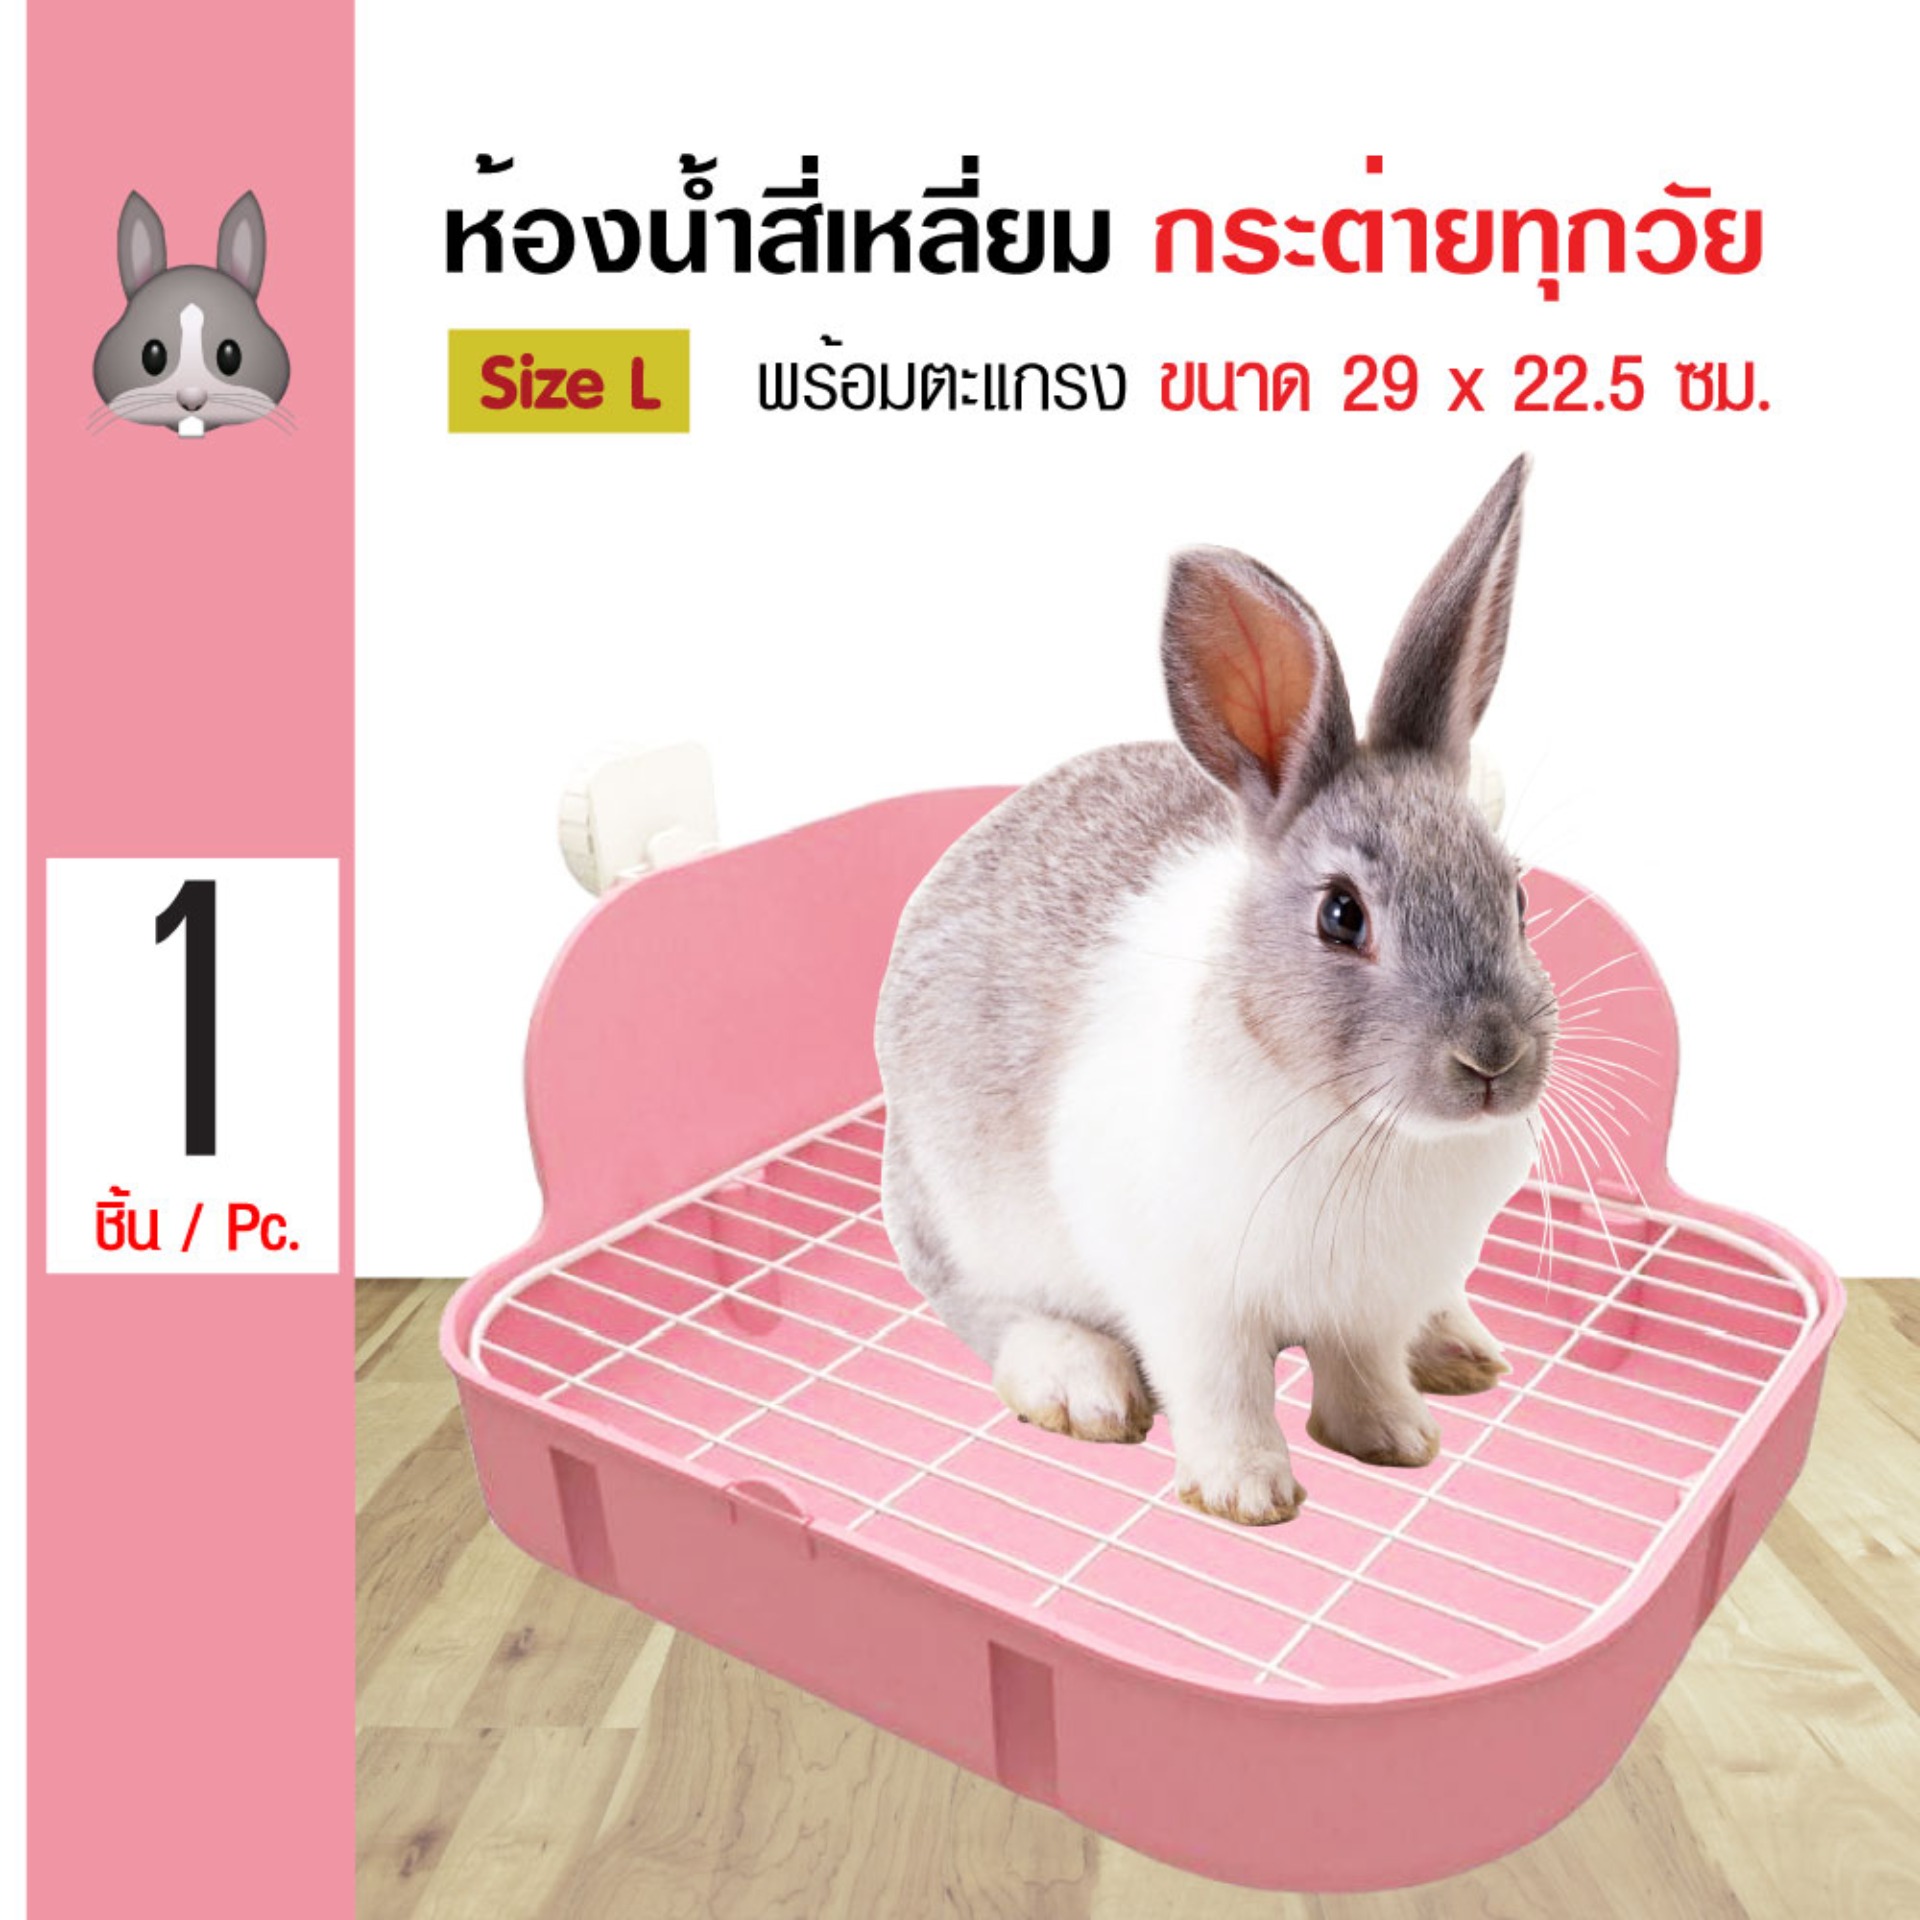 Rabbit Toilet ห้องน้ำกระต่าย รุ่นสี่เหลี่ยม พร้อมถาดรอง สำหรับกระต่ายทุกวัย ขนาด 29x22.5 ซม.